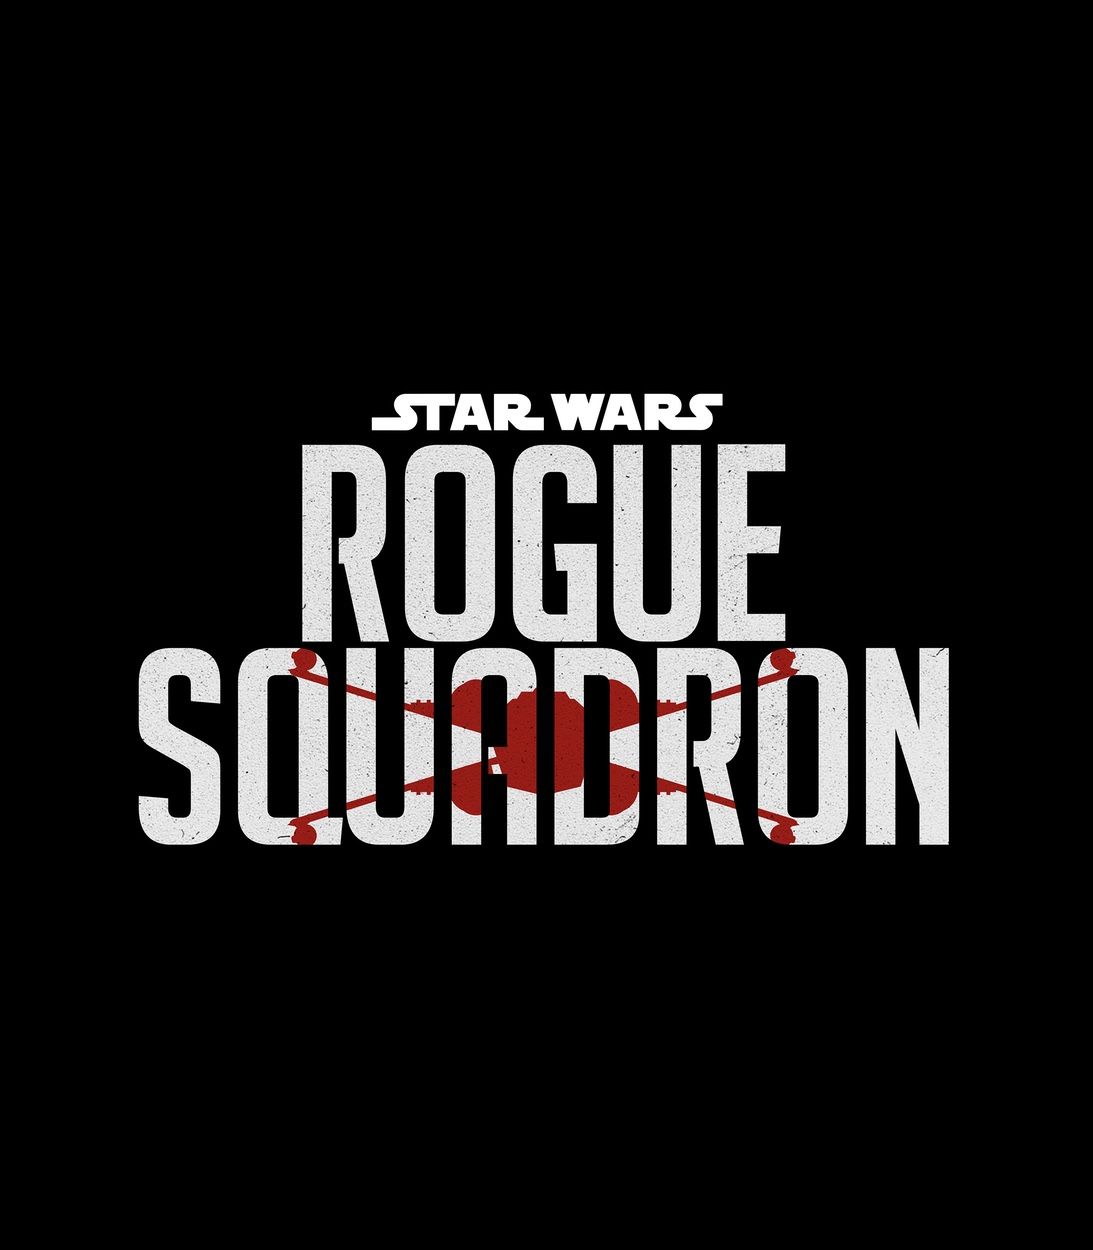 Star Wars Rogue Squadron movie logo